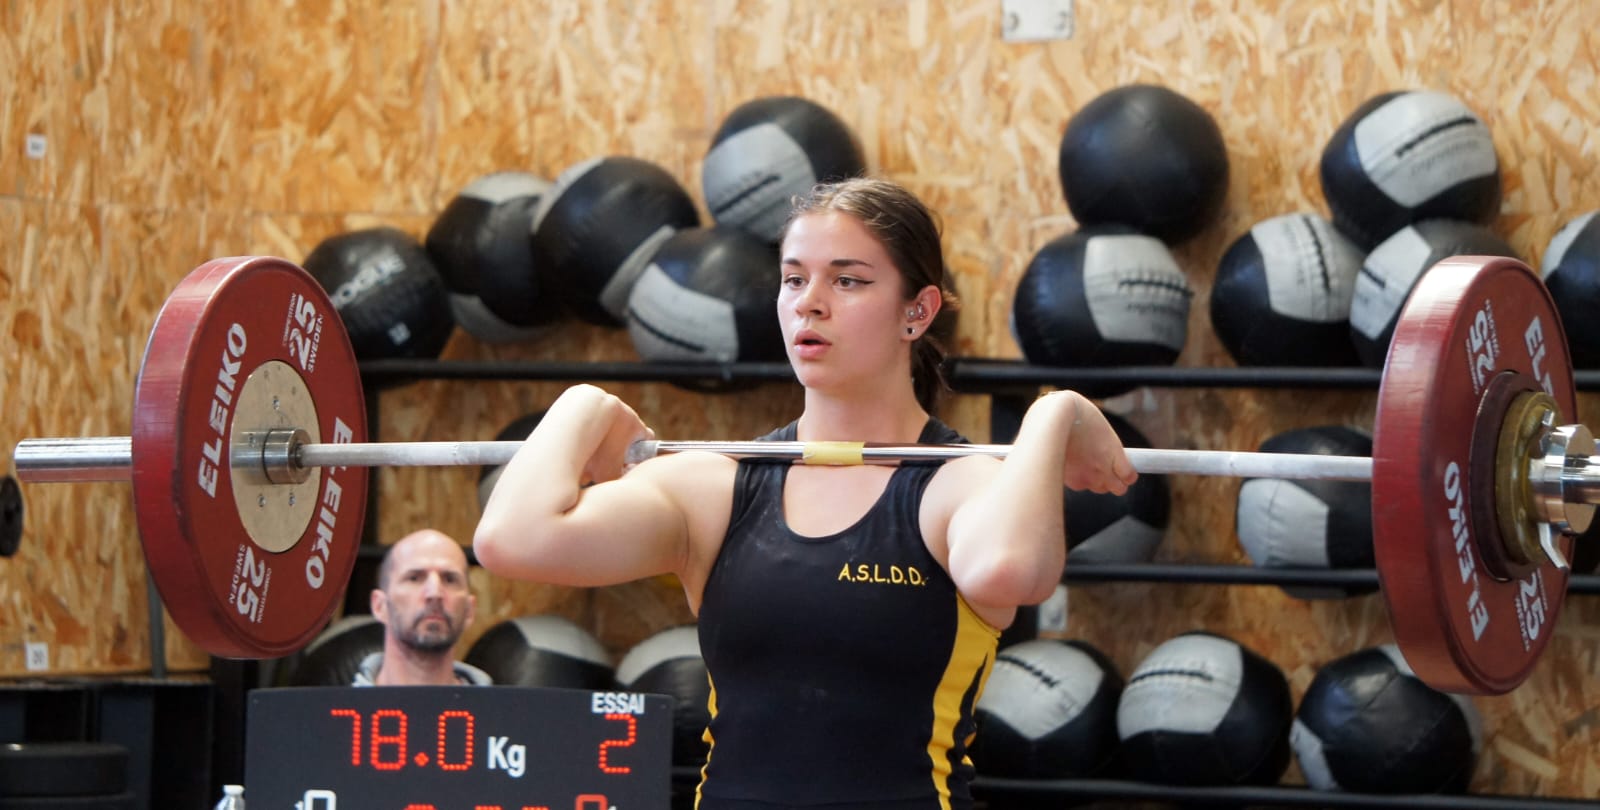 Oriane, vice-championne fédérale en U20 -71kg